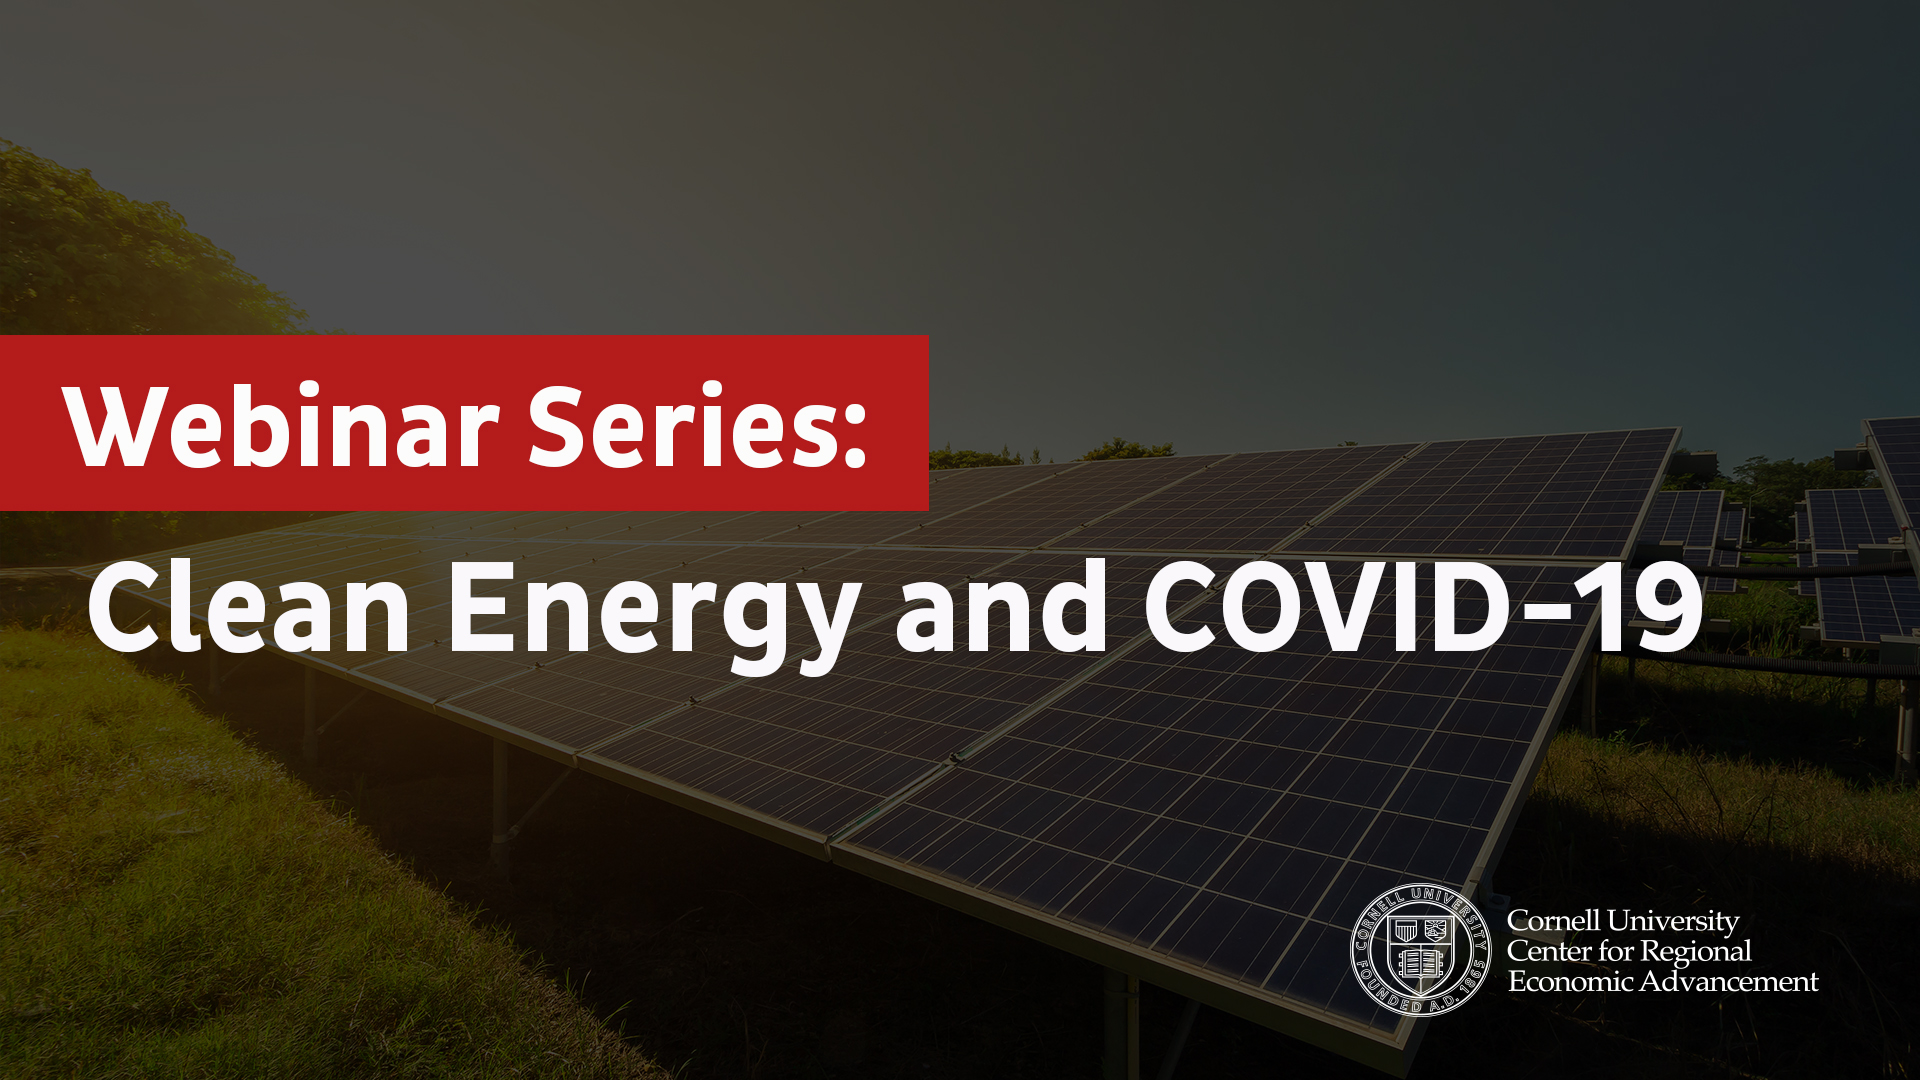 "Webinar Series: Clean Energy and COVID-19"